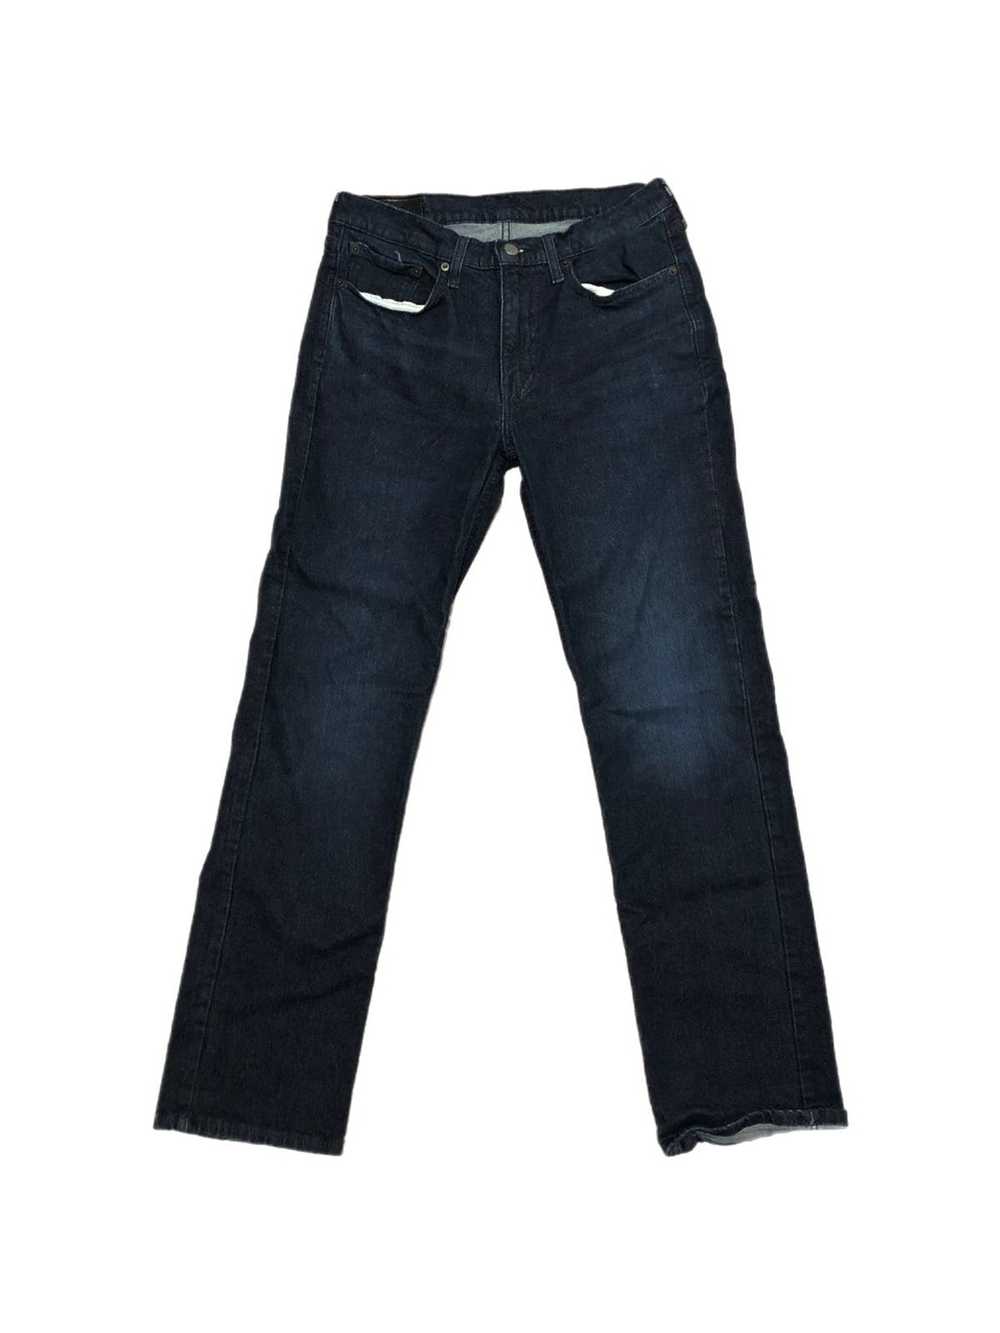 Levi's Levi’s 541 Dark Wash Jeans - image 2